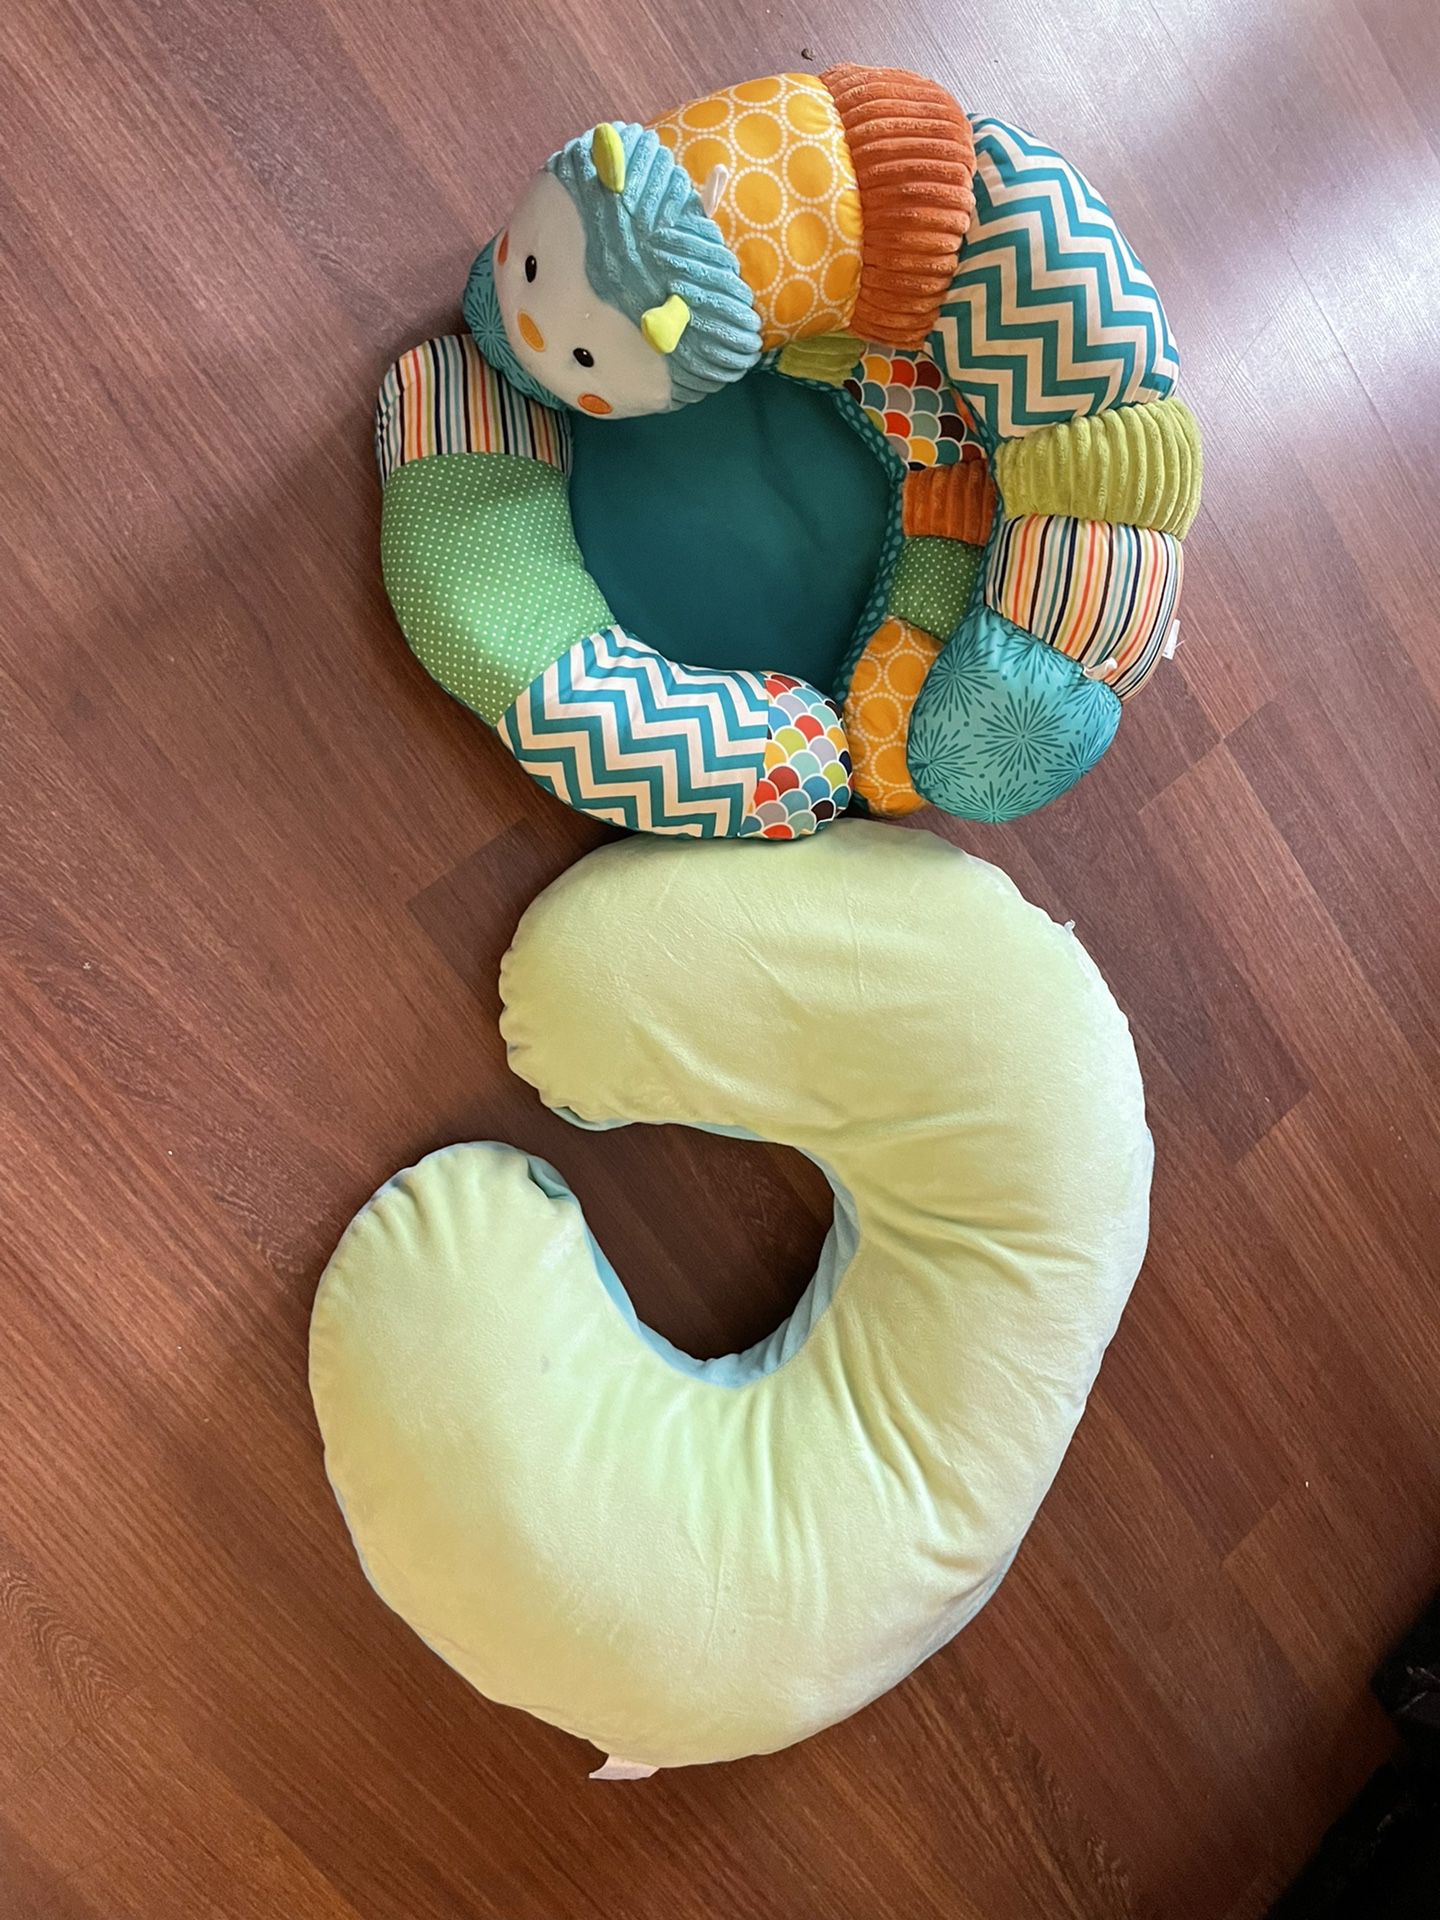 Baby Boppy Pillow & Prop-A-Pillar Activity Toy